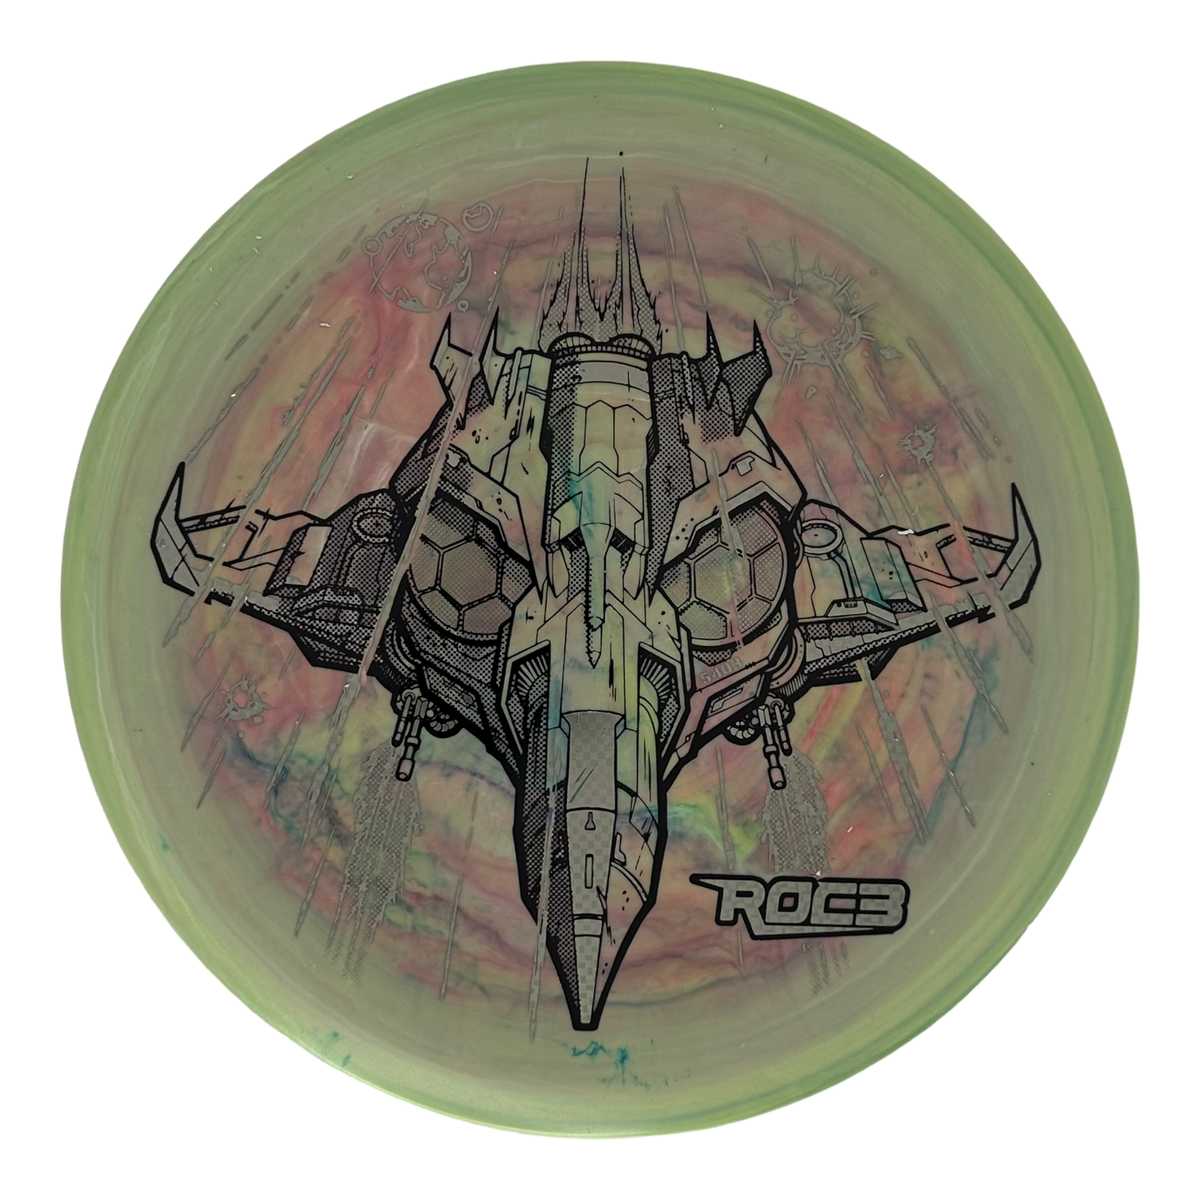 Innova Galactic XT Roc3 - Space Force